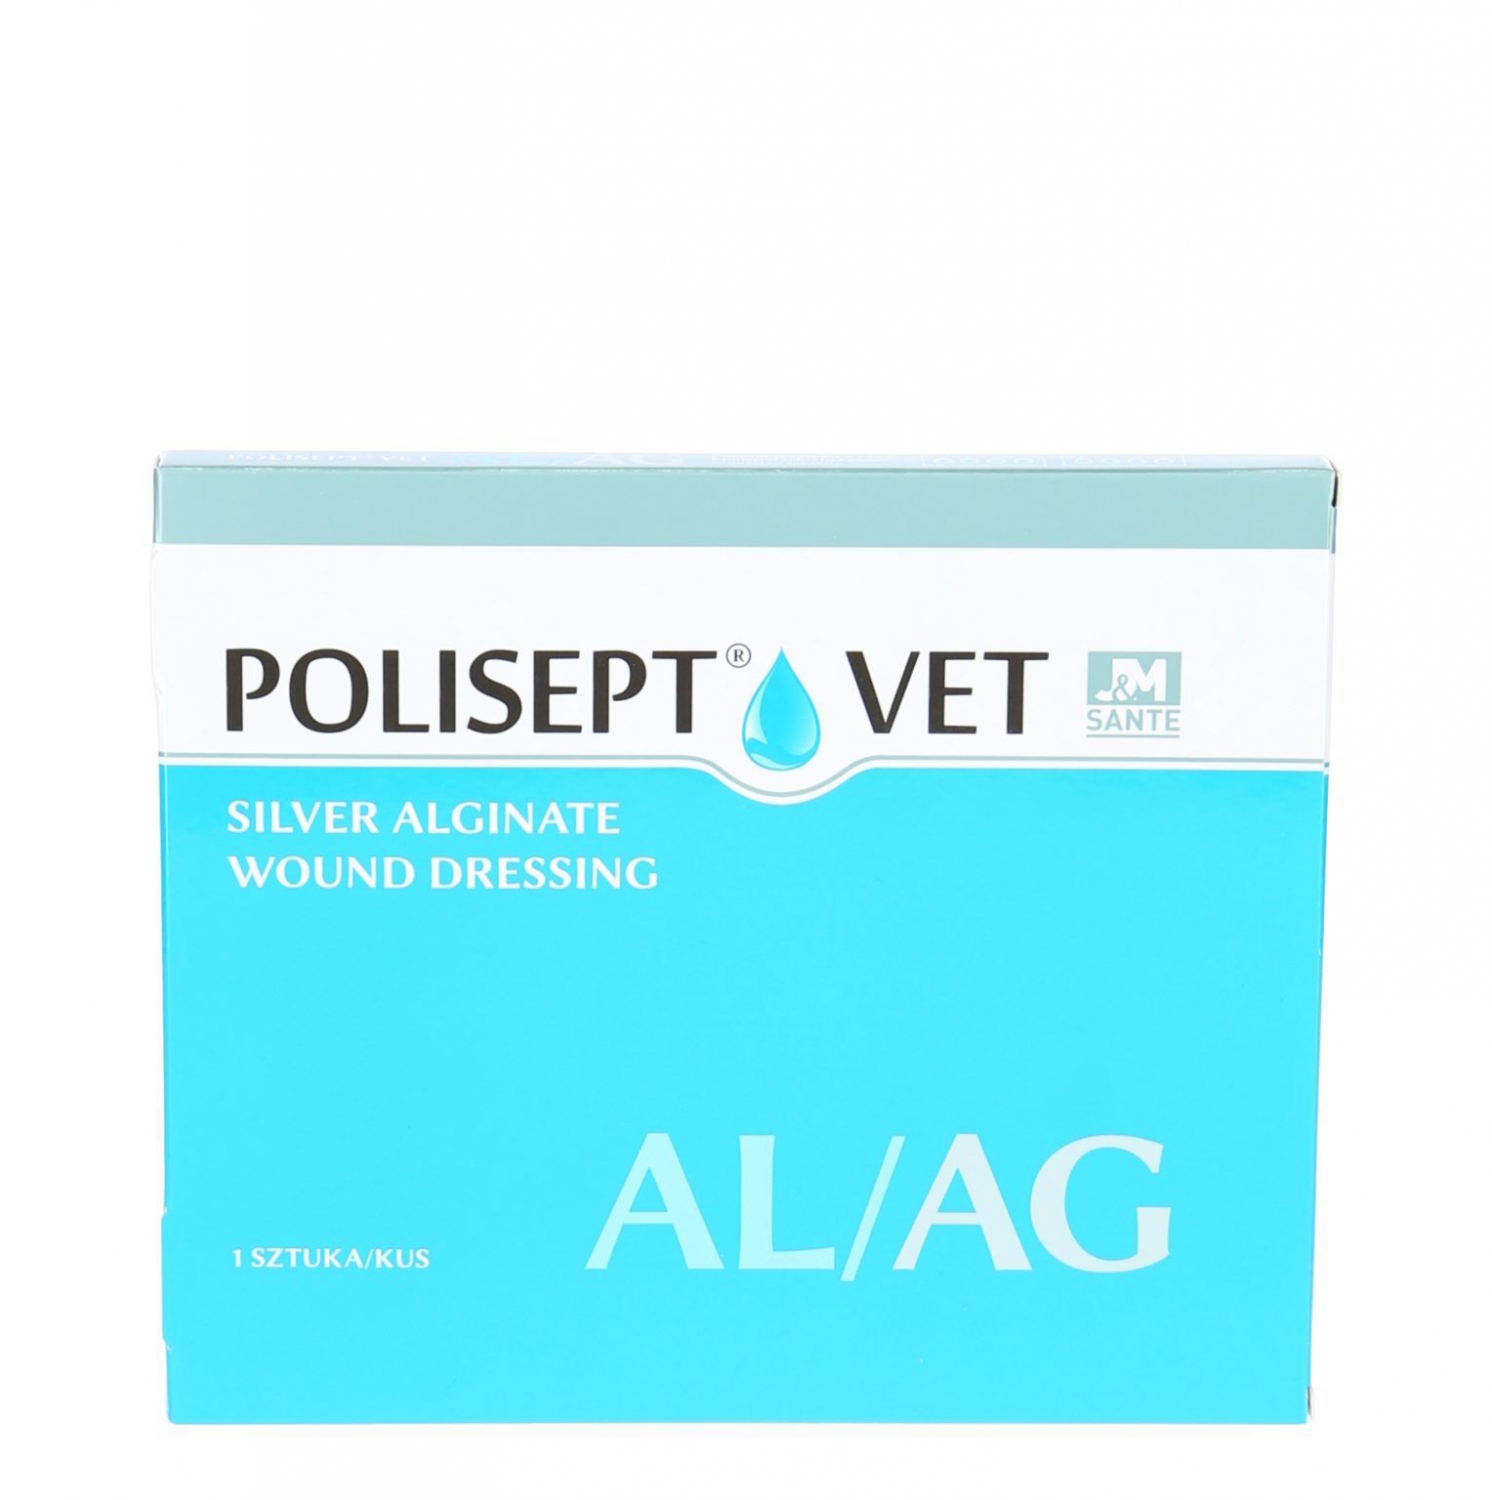 Polispt Vet AL/AG Silver Alginate Wound Dressing sterylny opatrunek na rany 10x10cm 3szt. 